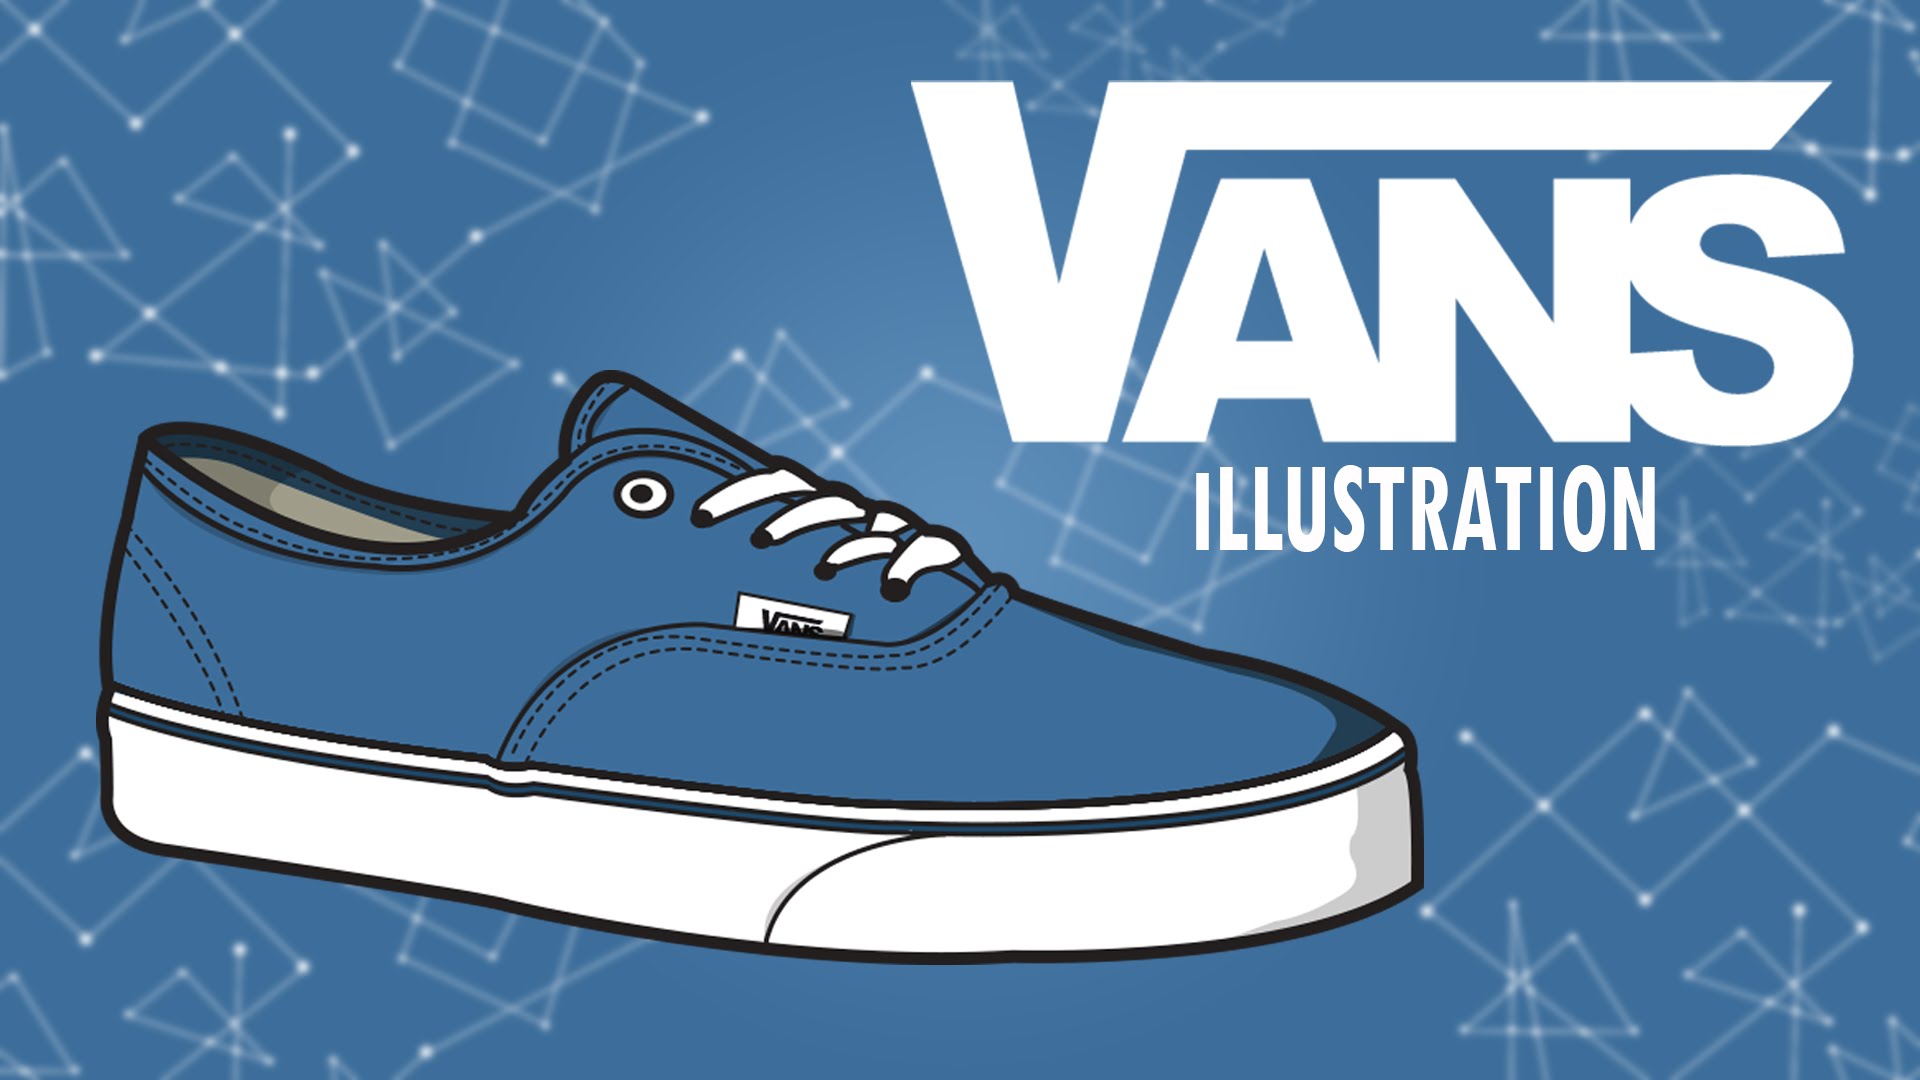 vans shoes images download